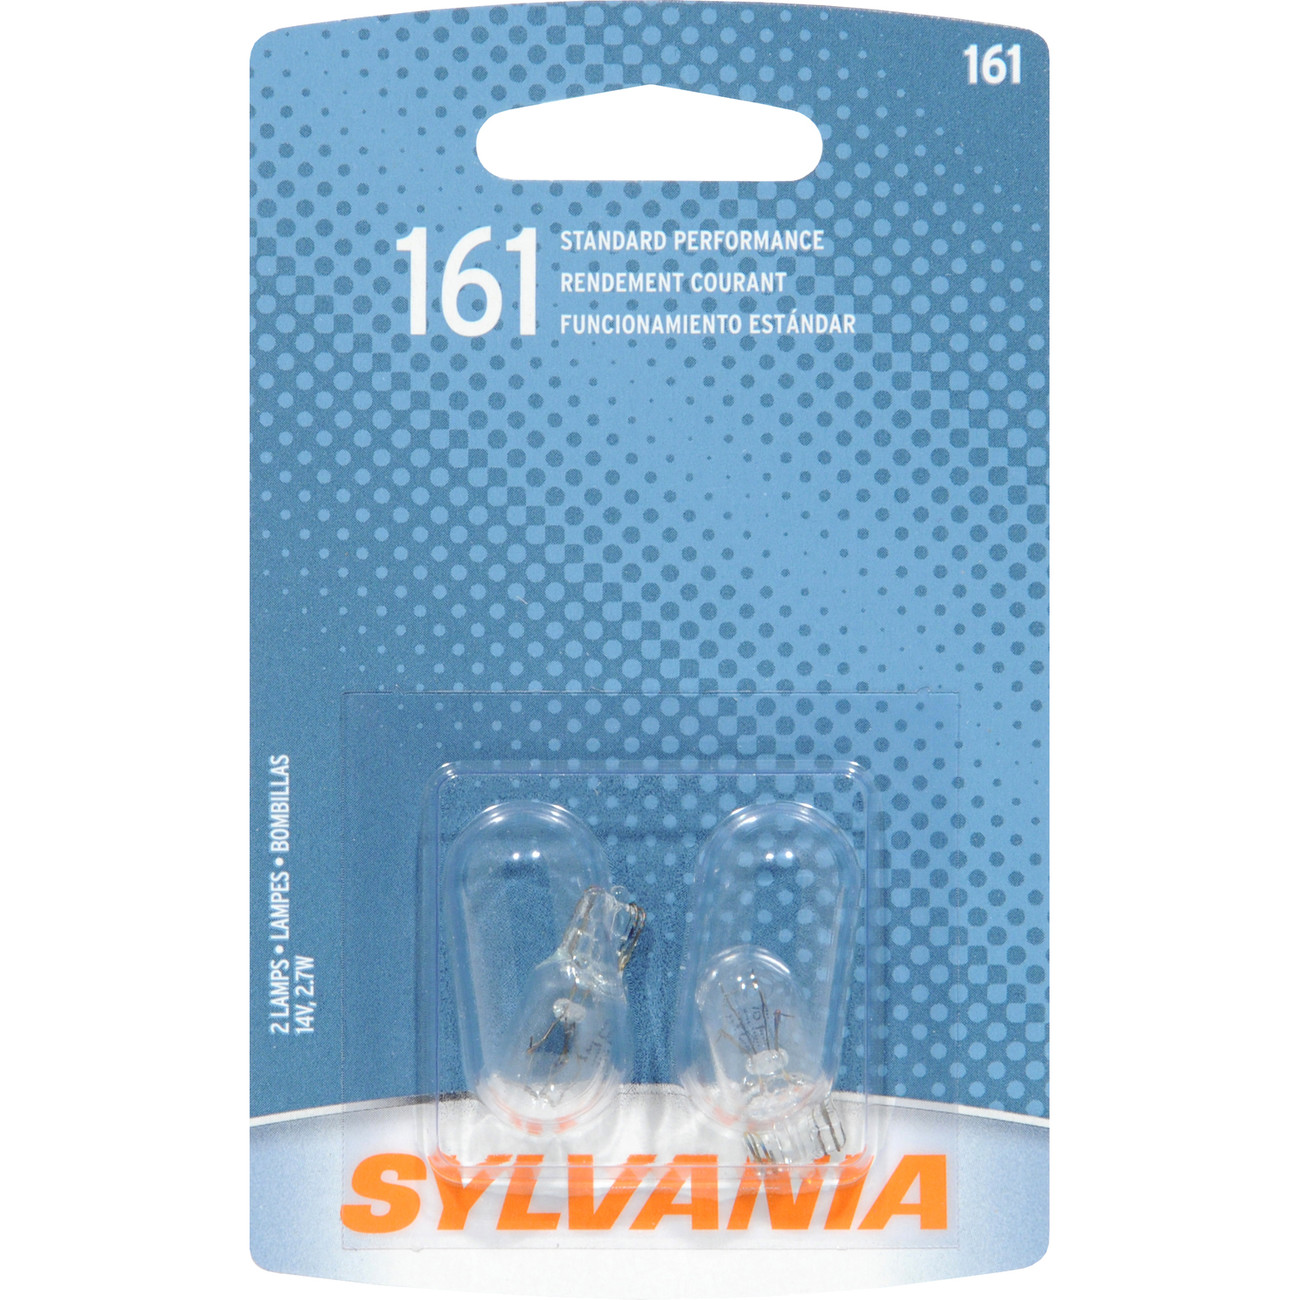 SYLVANIA RETAIL PACKS - Blister Pack Twin Turn Signal Indicator Light Bulb - SYR 161.BP2